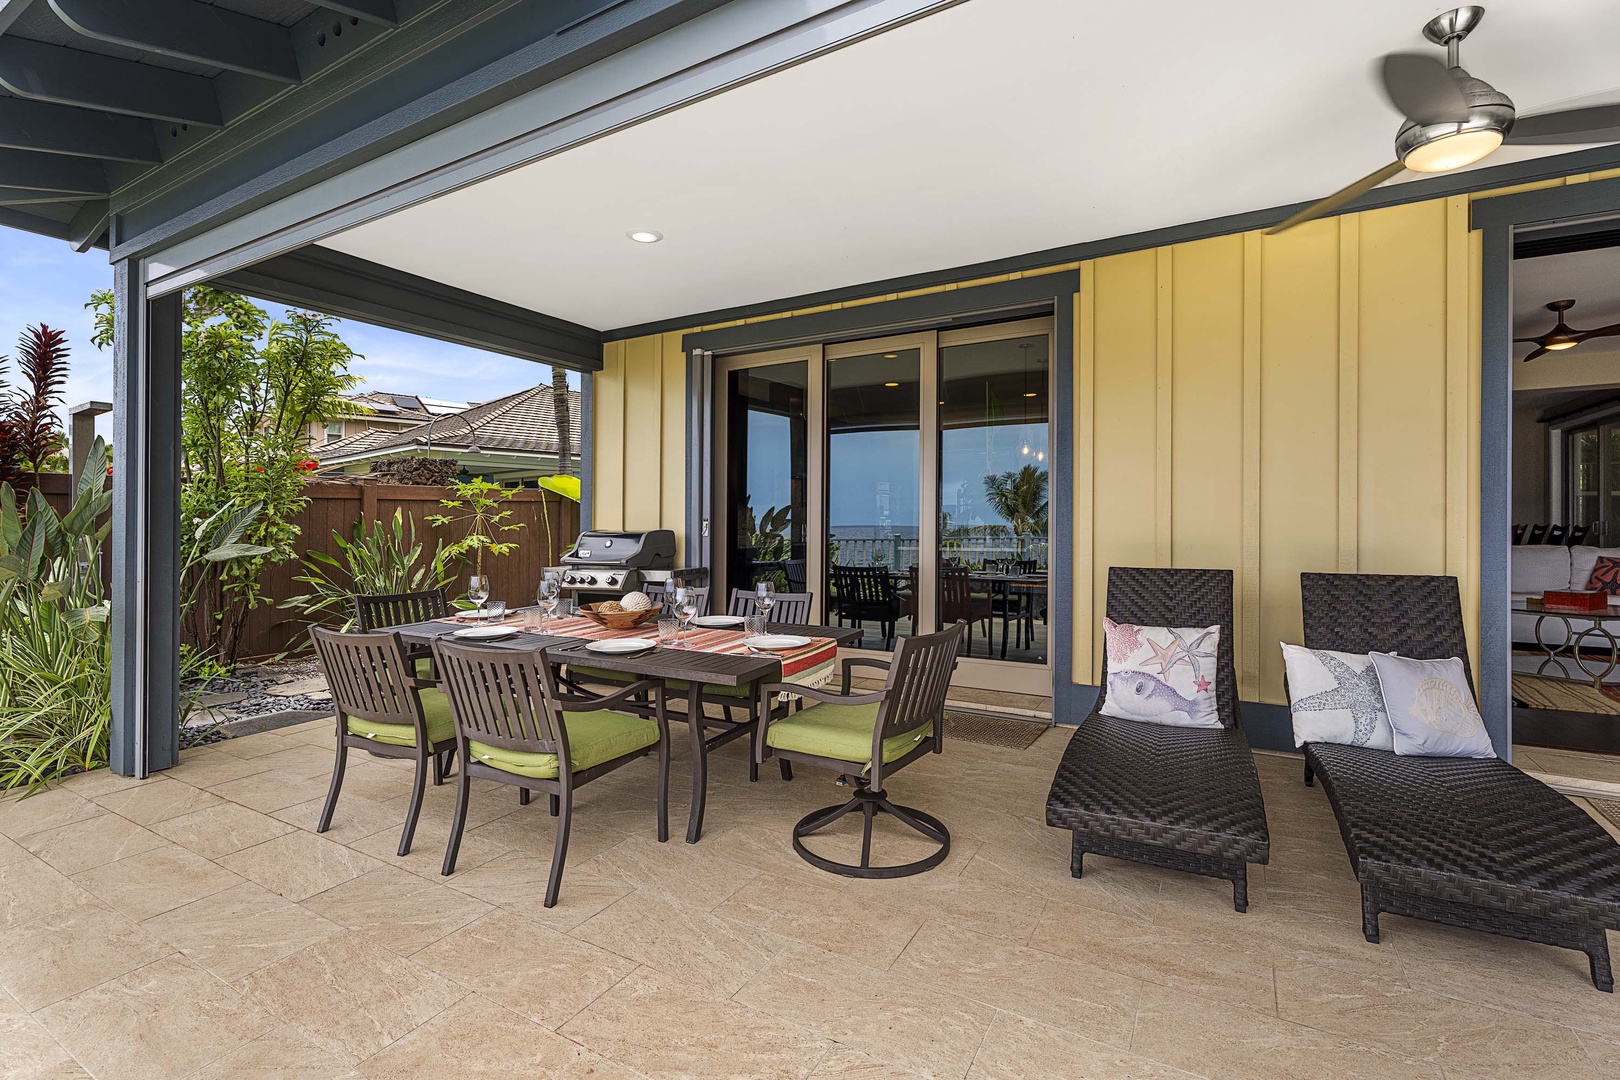 Kailua Kona Vacation Rentals, Holua Kai #20 - Large sliding pocket doors make the space functional and welcoming